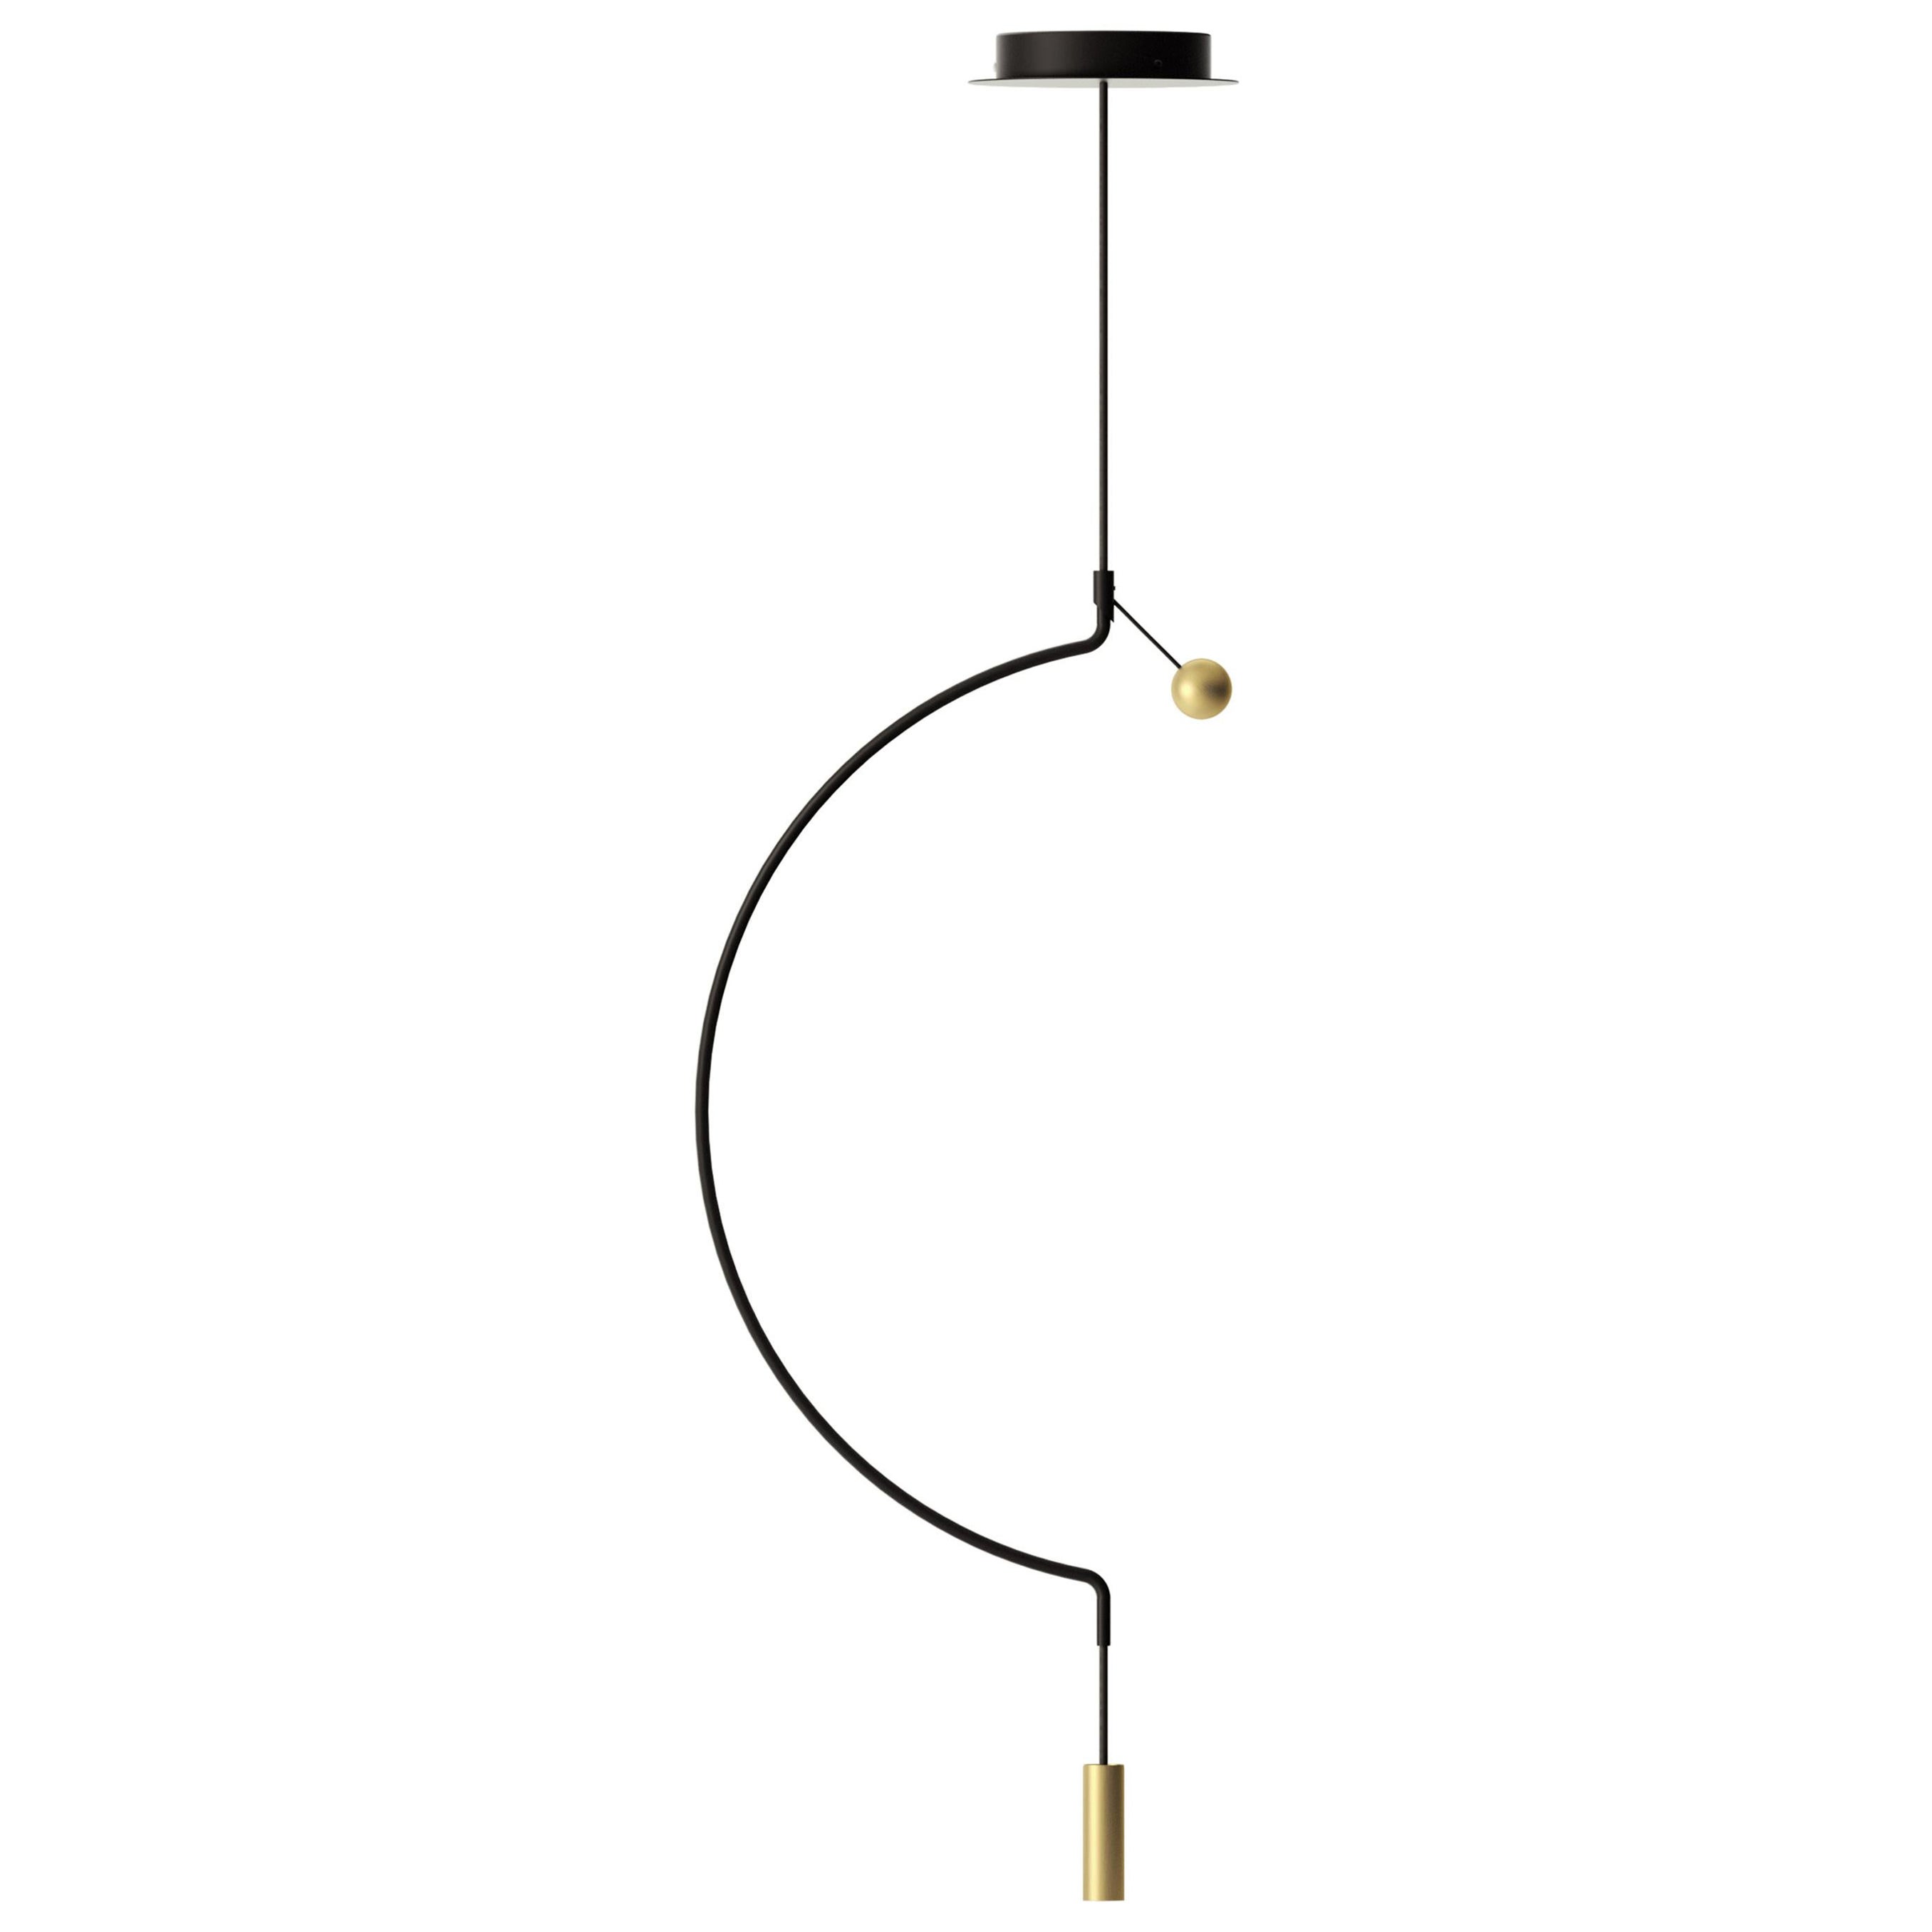 Axolight Liaison Model M1 Pendant Lamp in Black/Gold by Sara Moroni